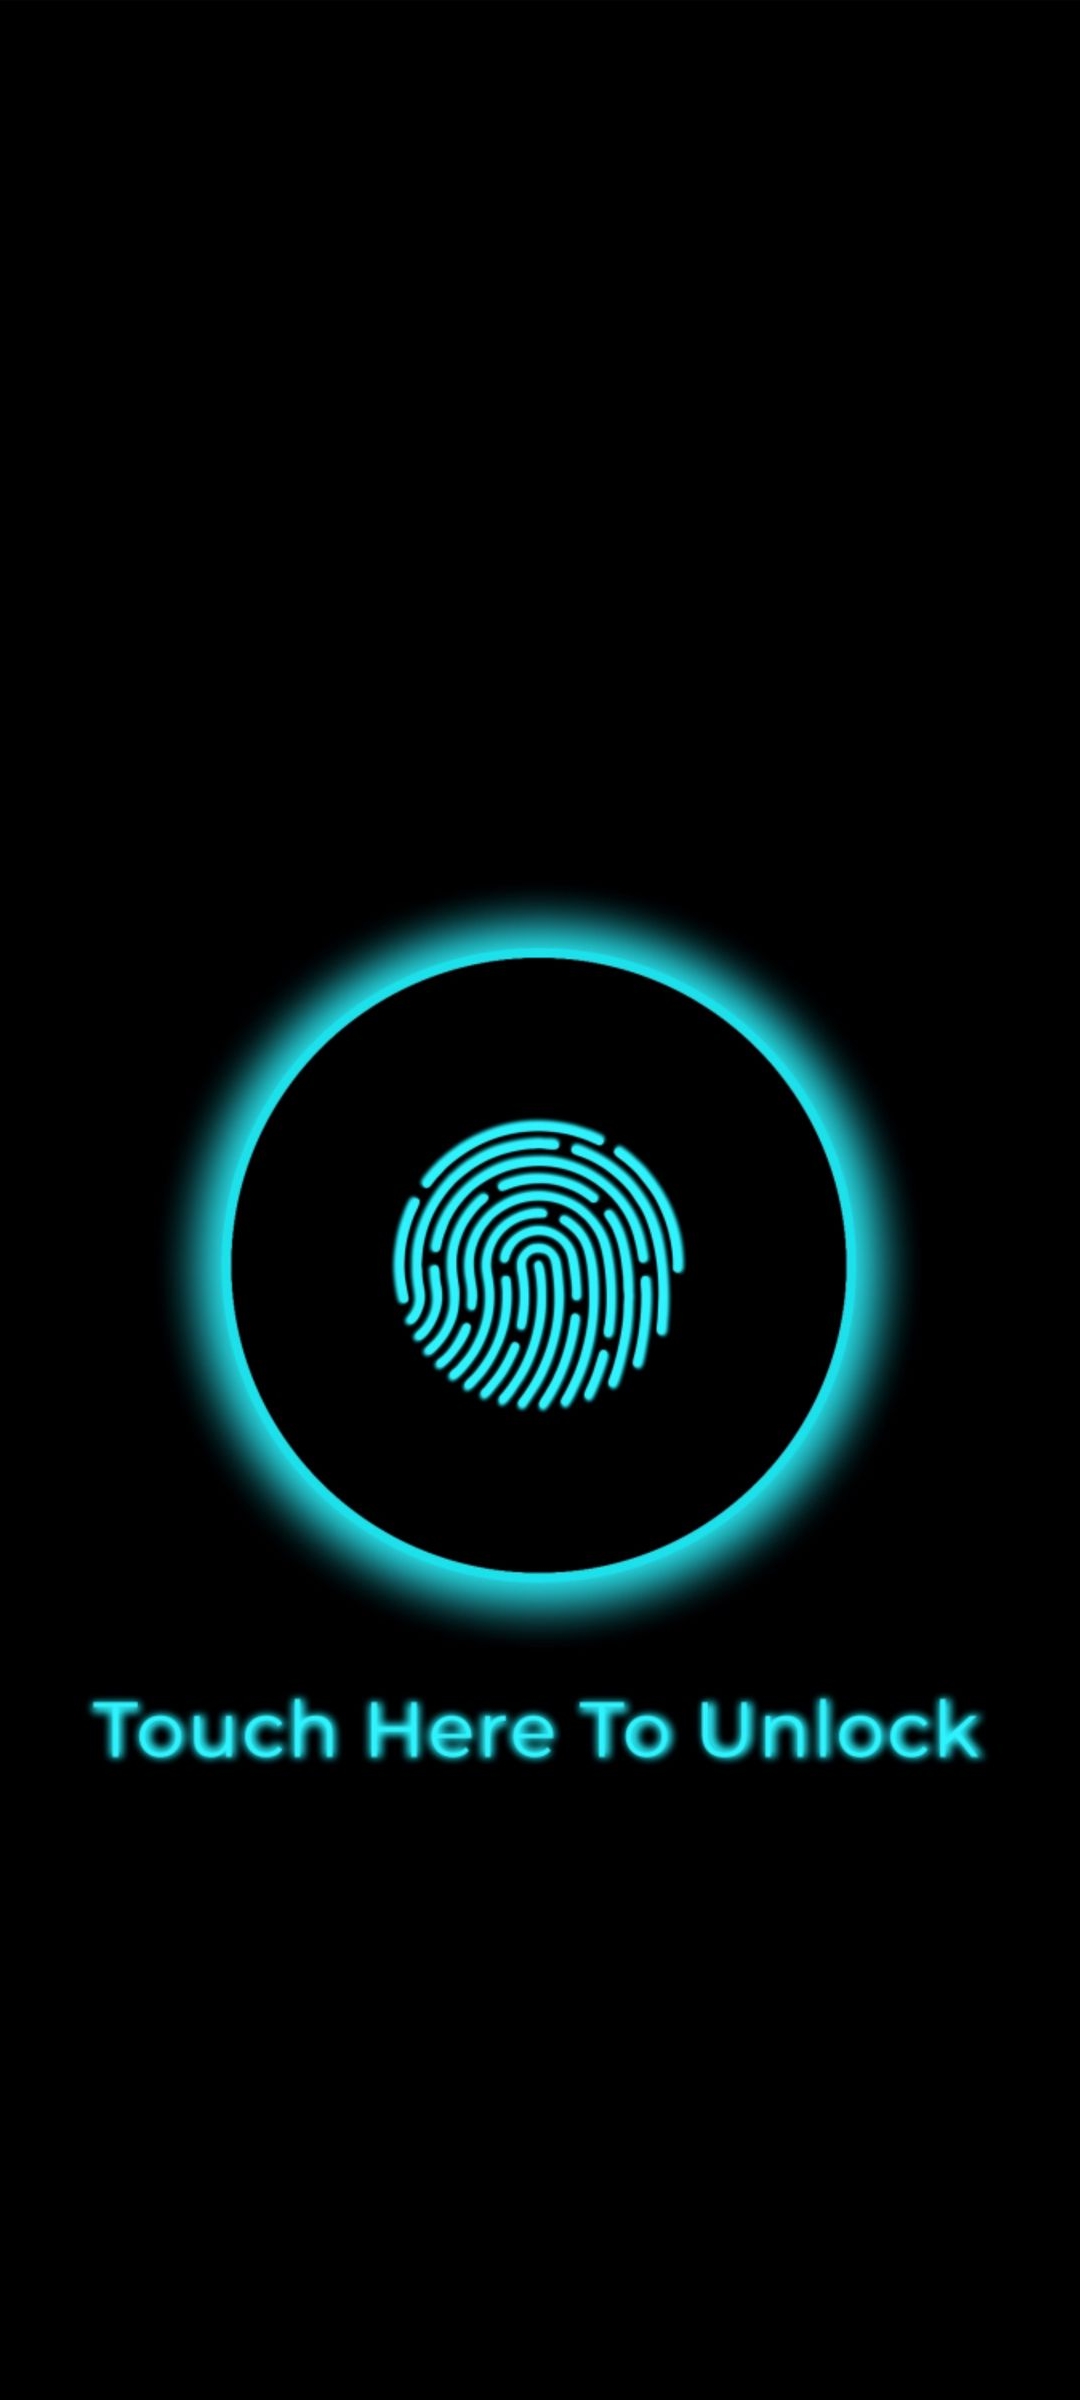 Touch Here To Unlock ロック解除 指紋認証 Oppo Reno3 A 壁紙 待ち受け スマラン